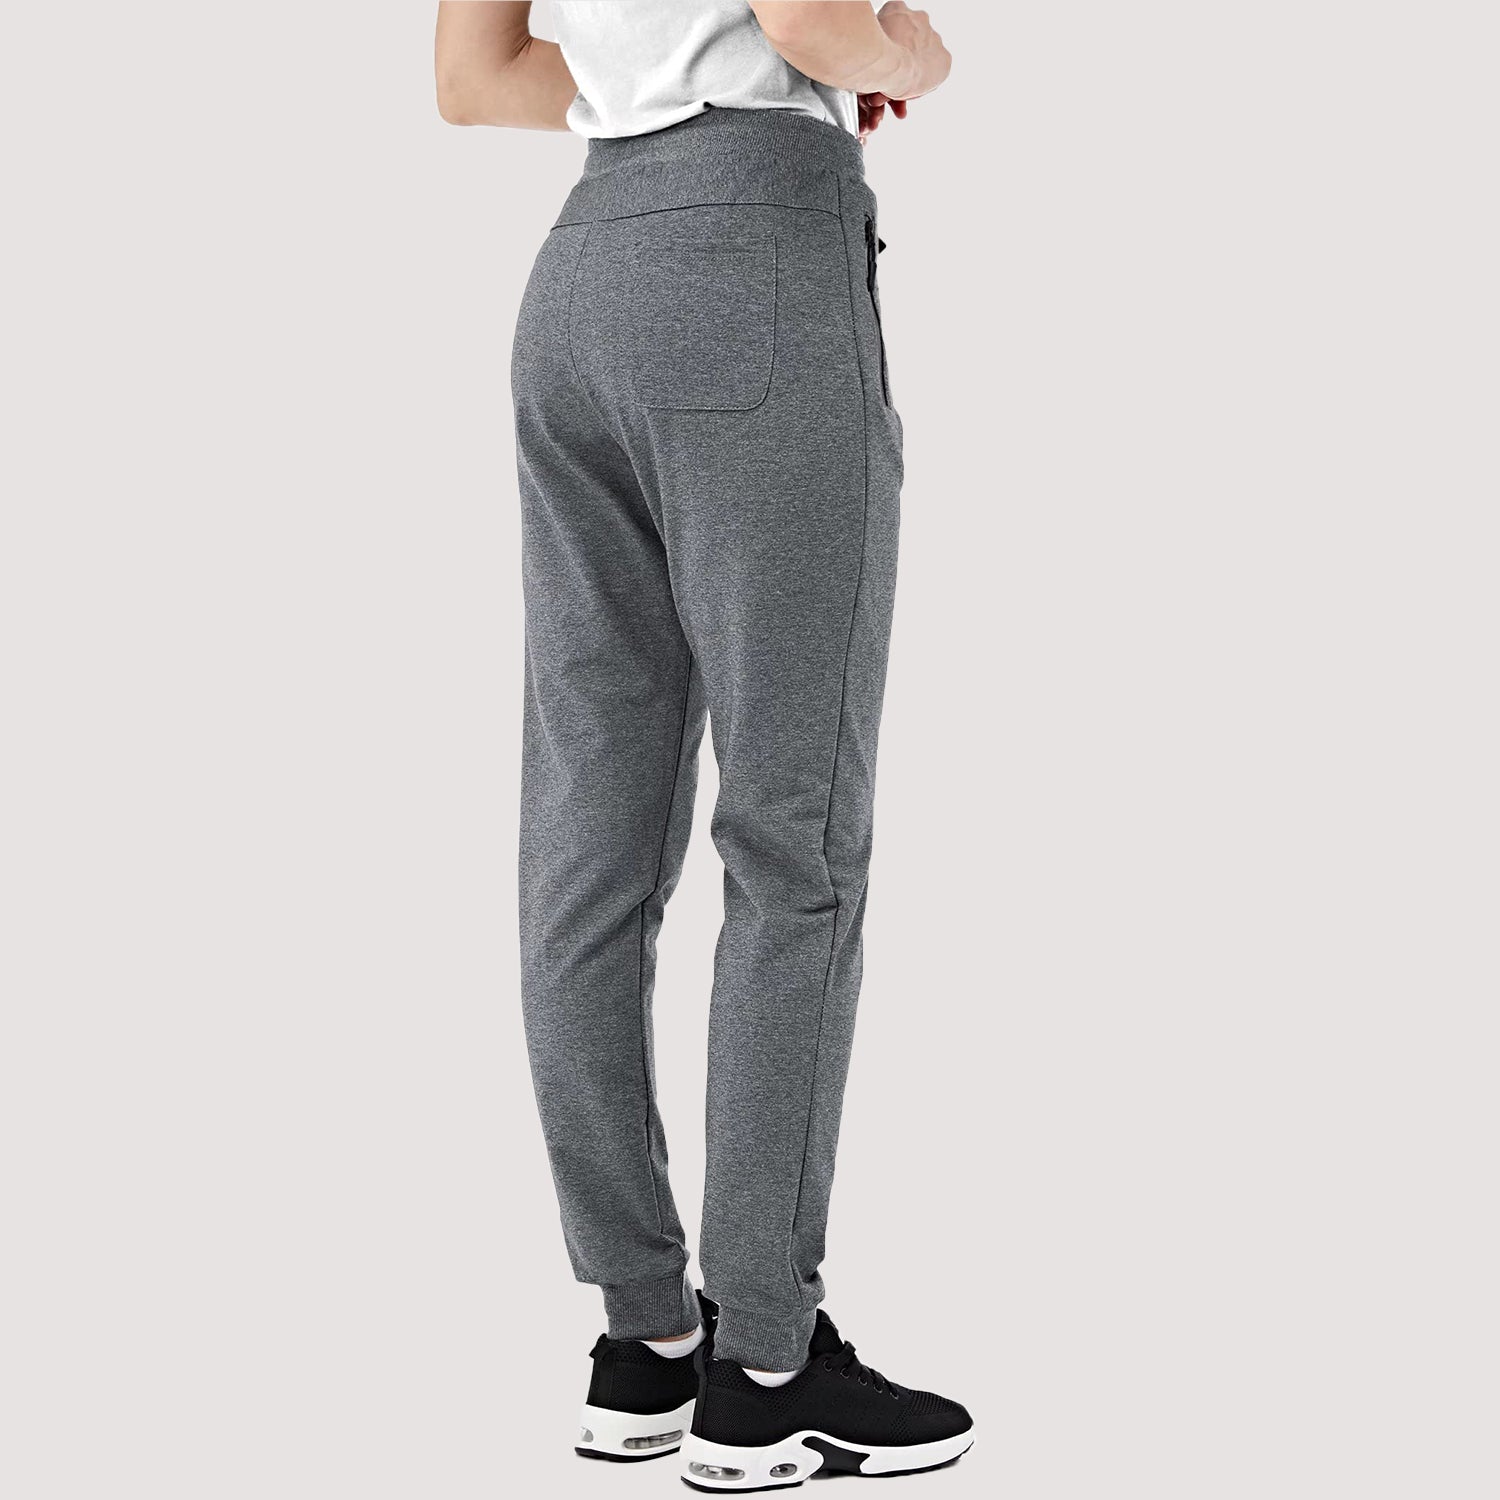 Women's Joggers Pants with Zipper Pockets Workout Gym Pants